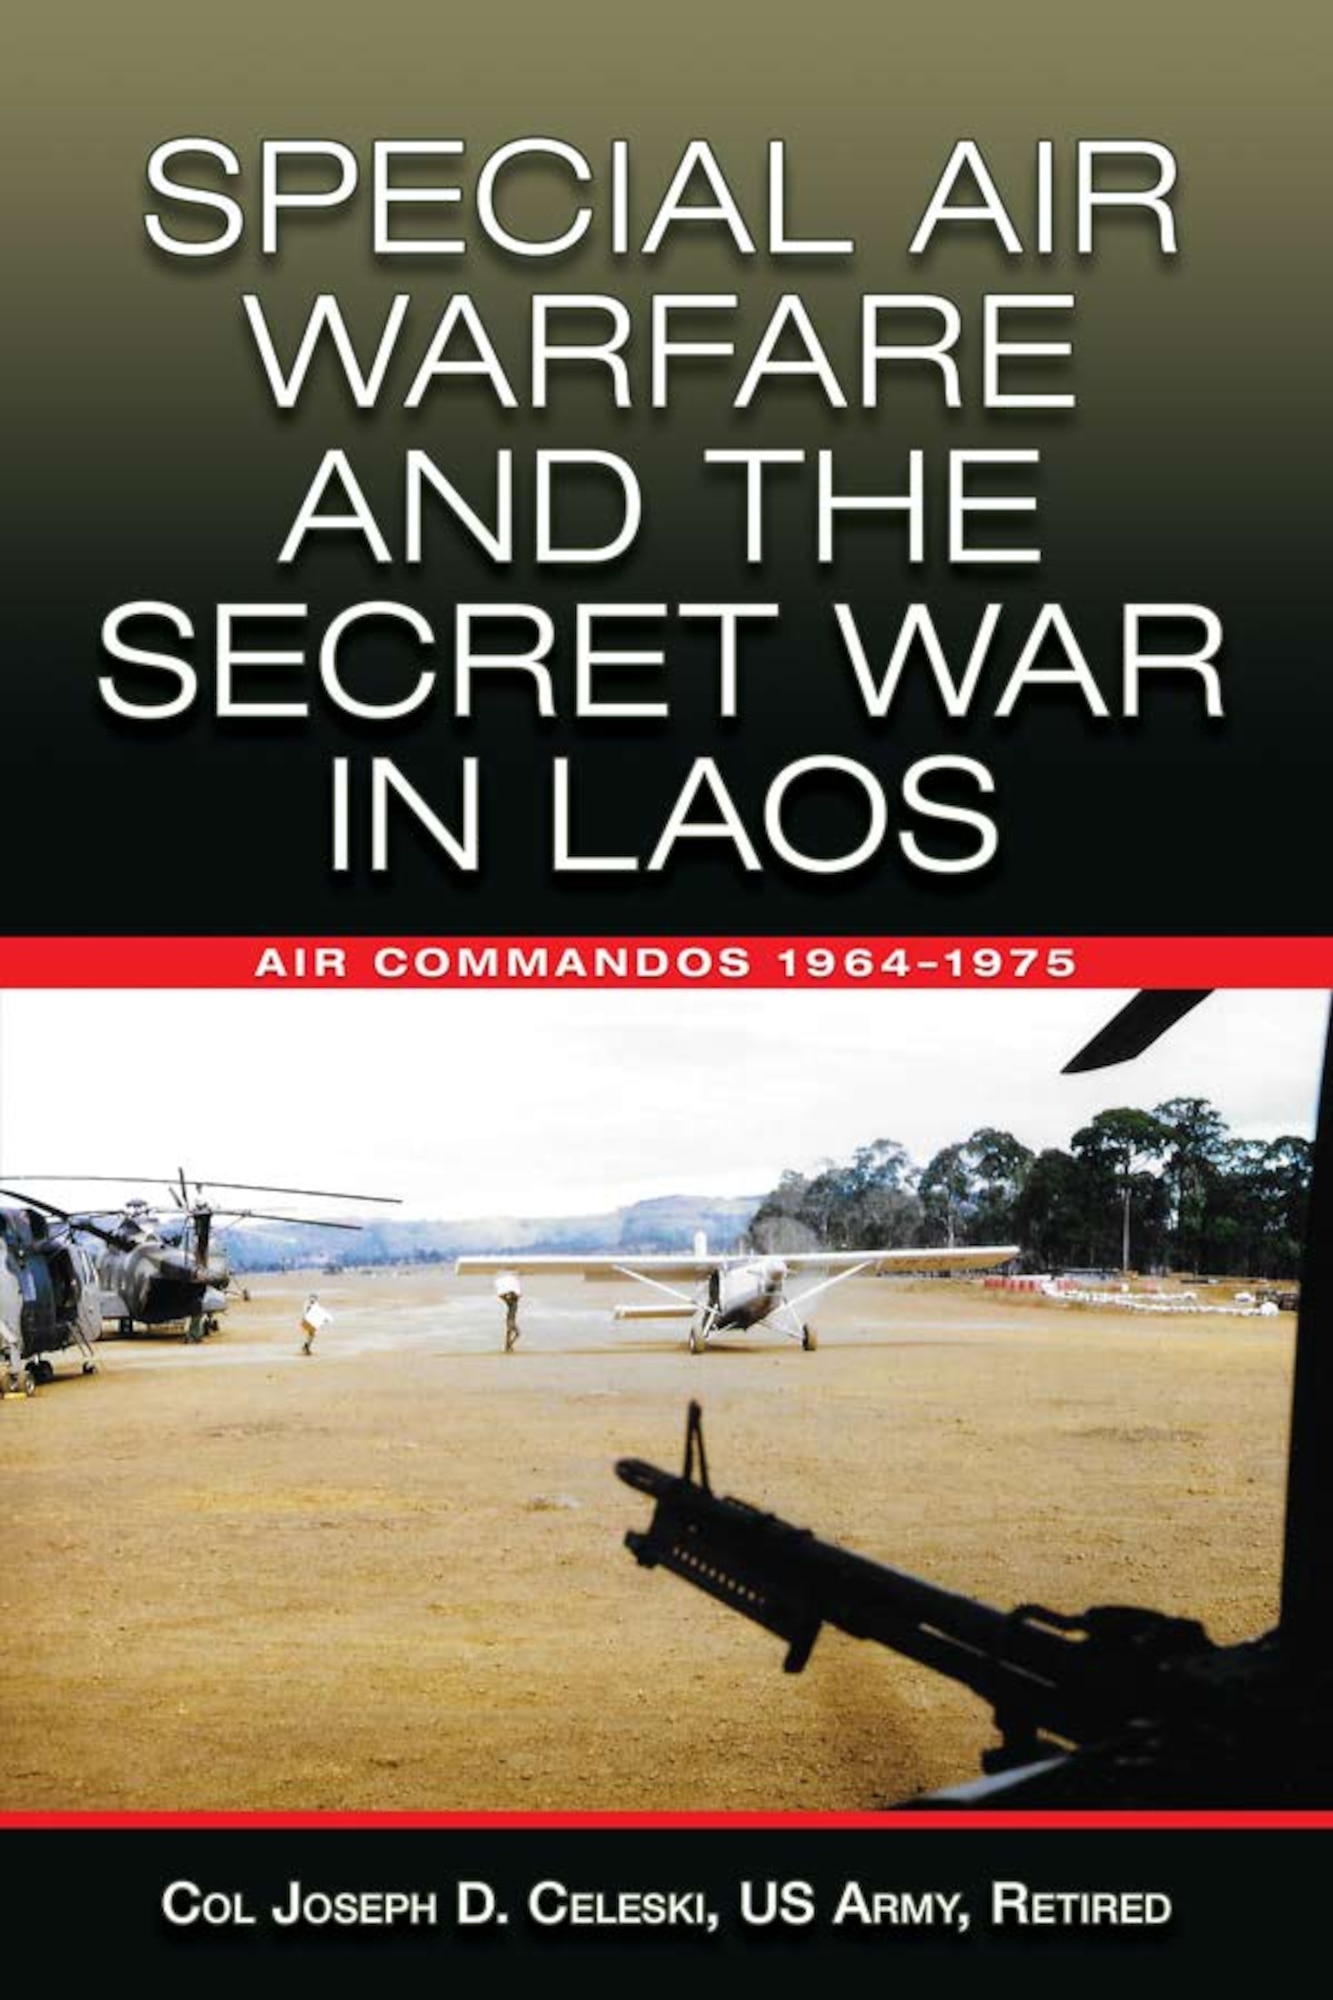 Air University Press releases book on secret war in Laos